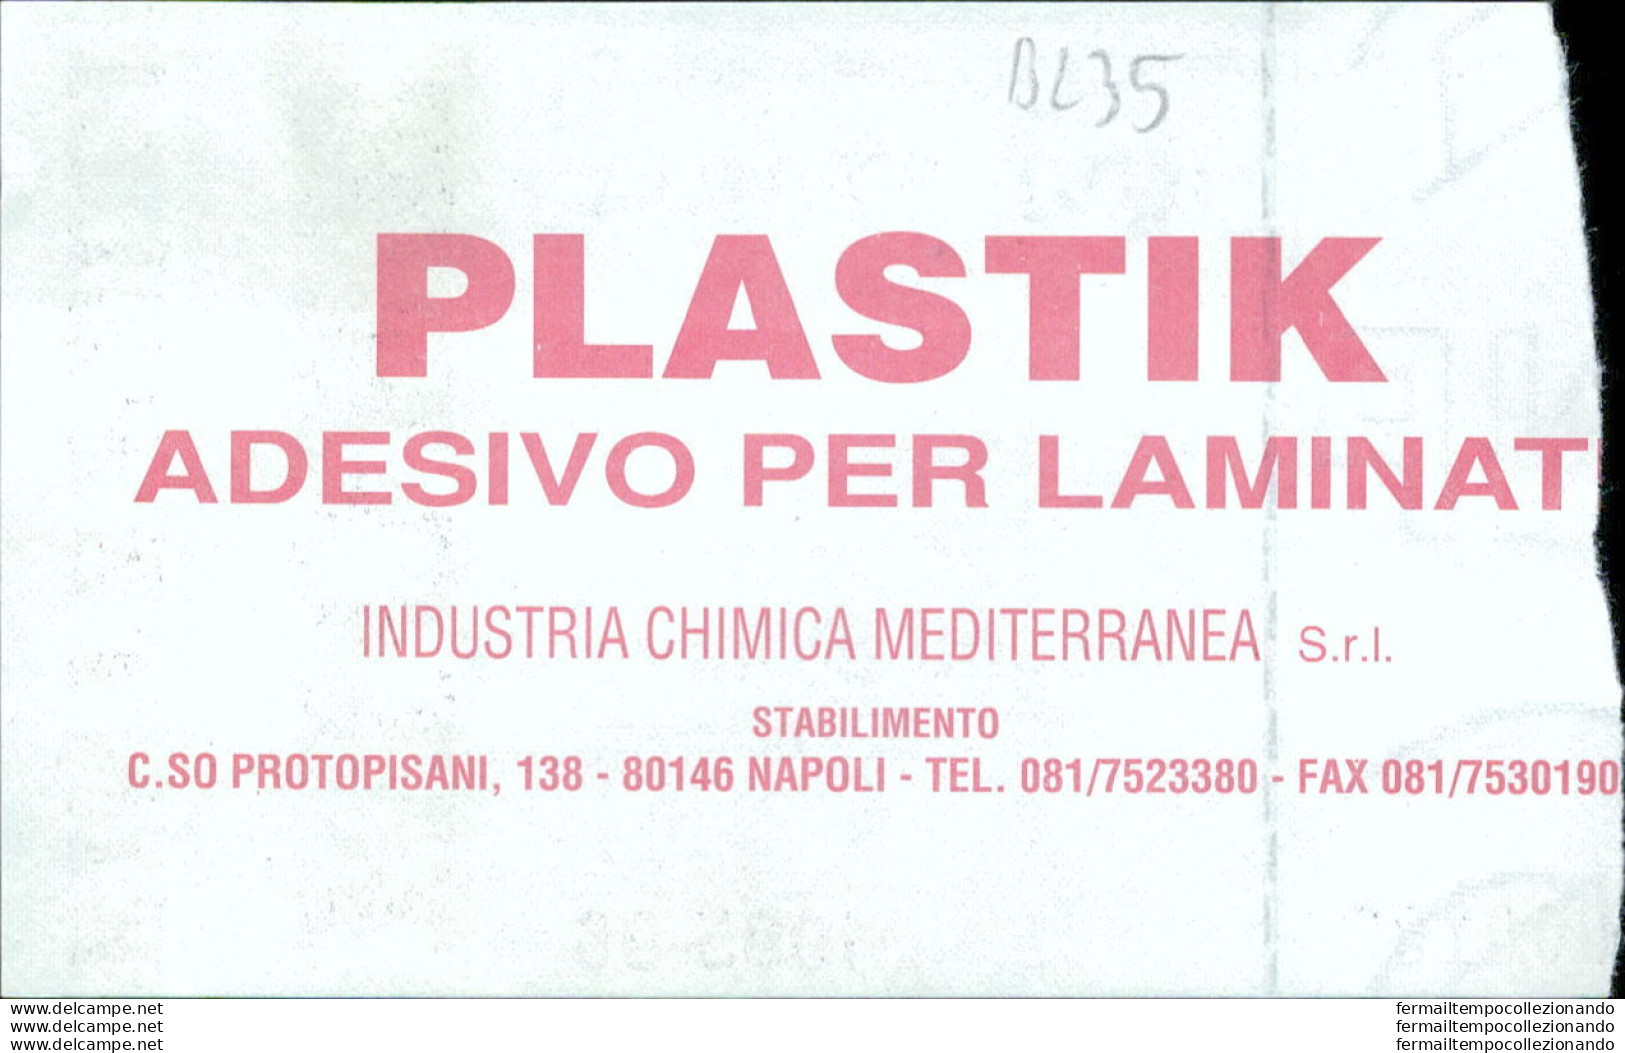 Bl35 Biglietto Calcio Ticket  Juve Stabia - Casarano 1995-96 - Toegangskaarten